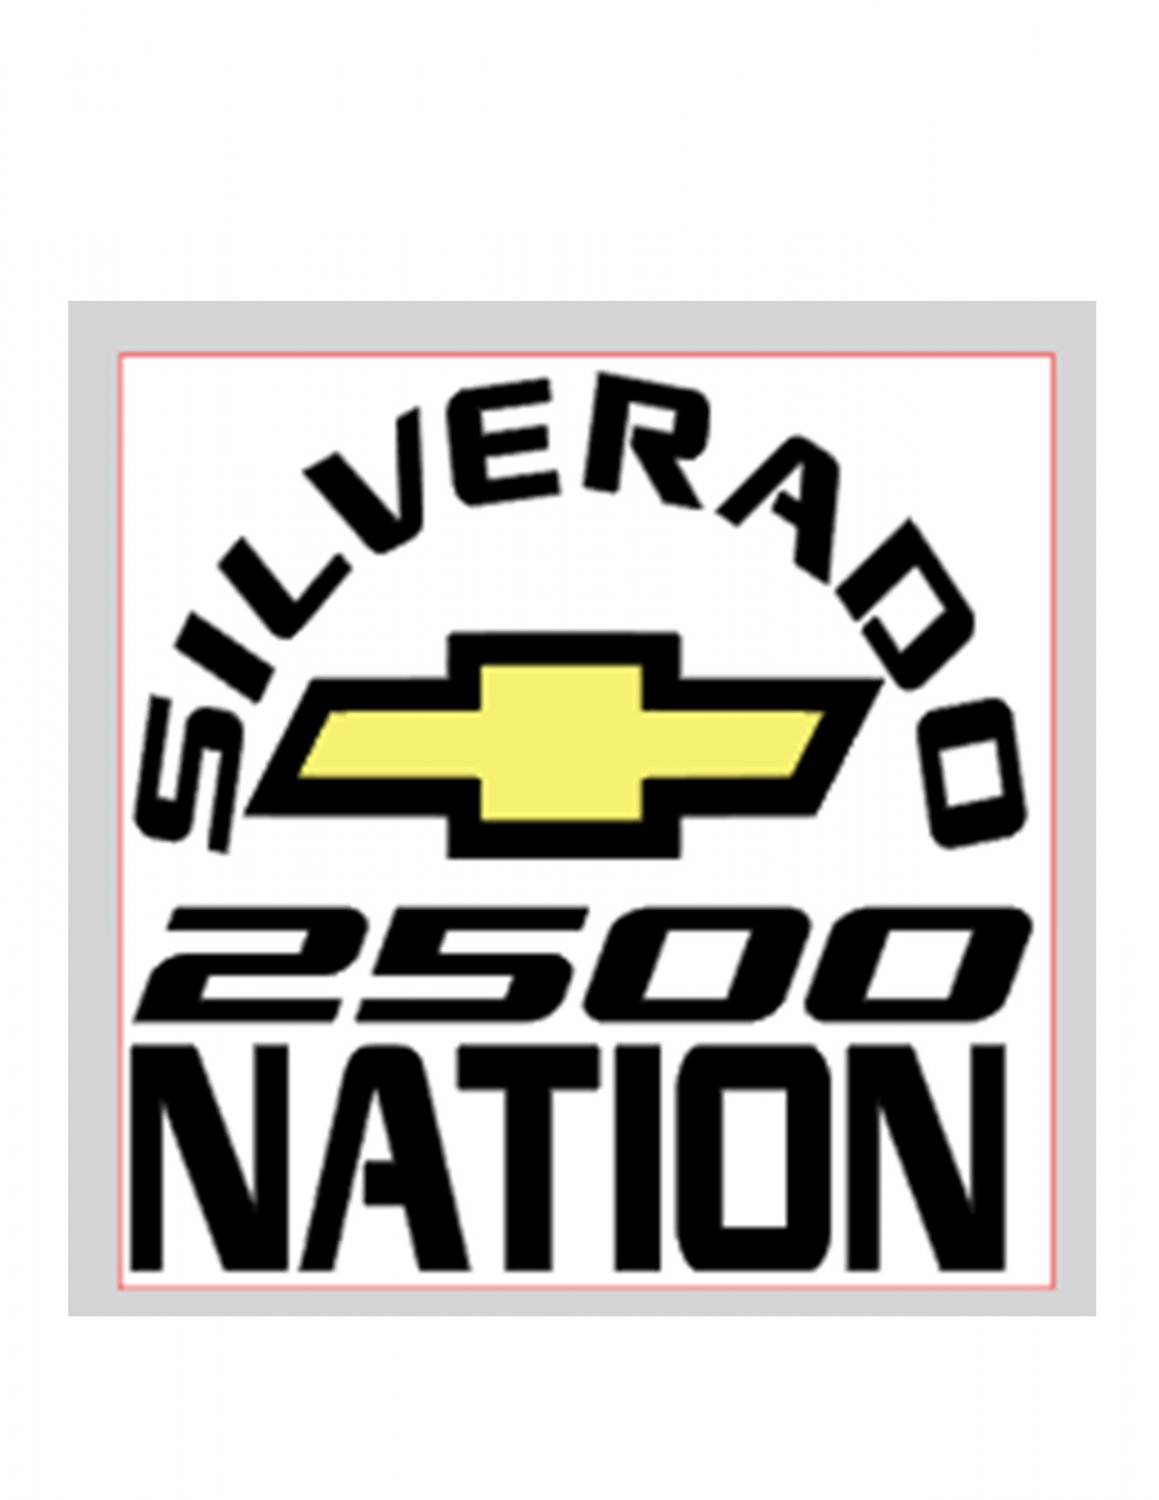 Silverado Nation 5"x5" Decal - 2500